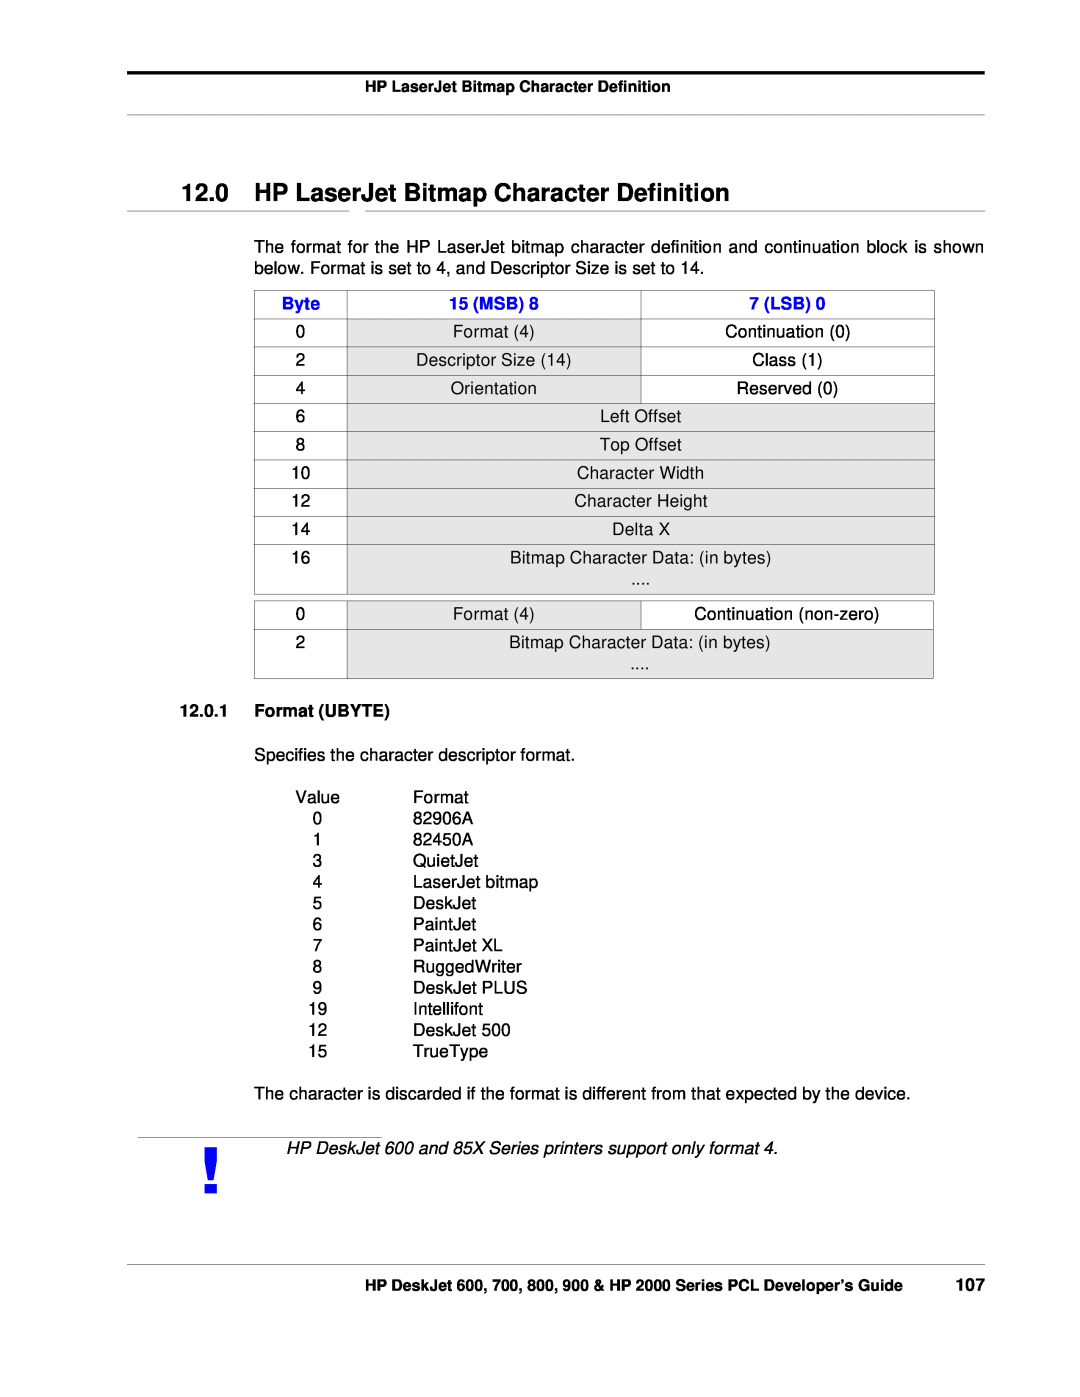 HP 700, 800 manual HP LaserJet Bitmap Character Definition, Format UBYTE 